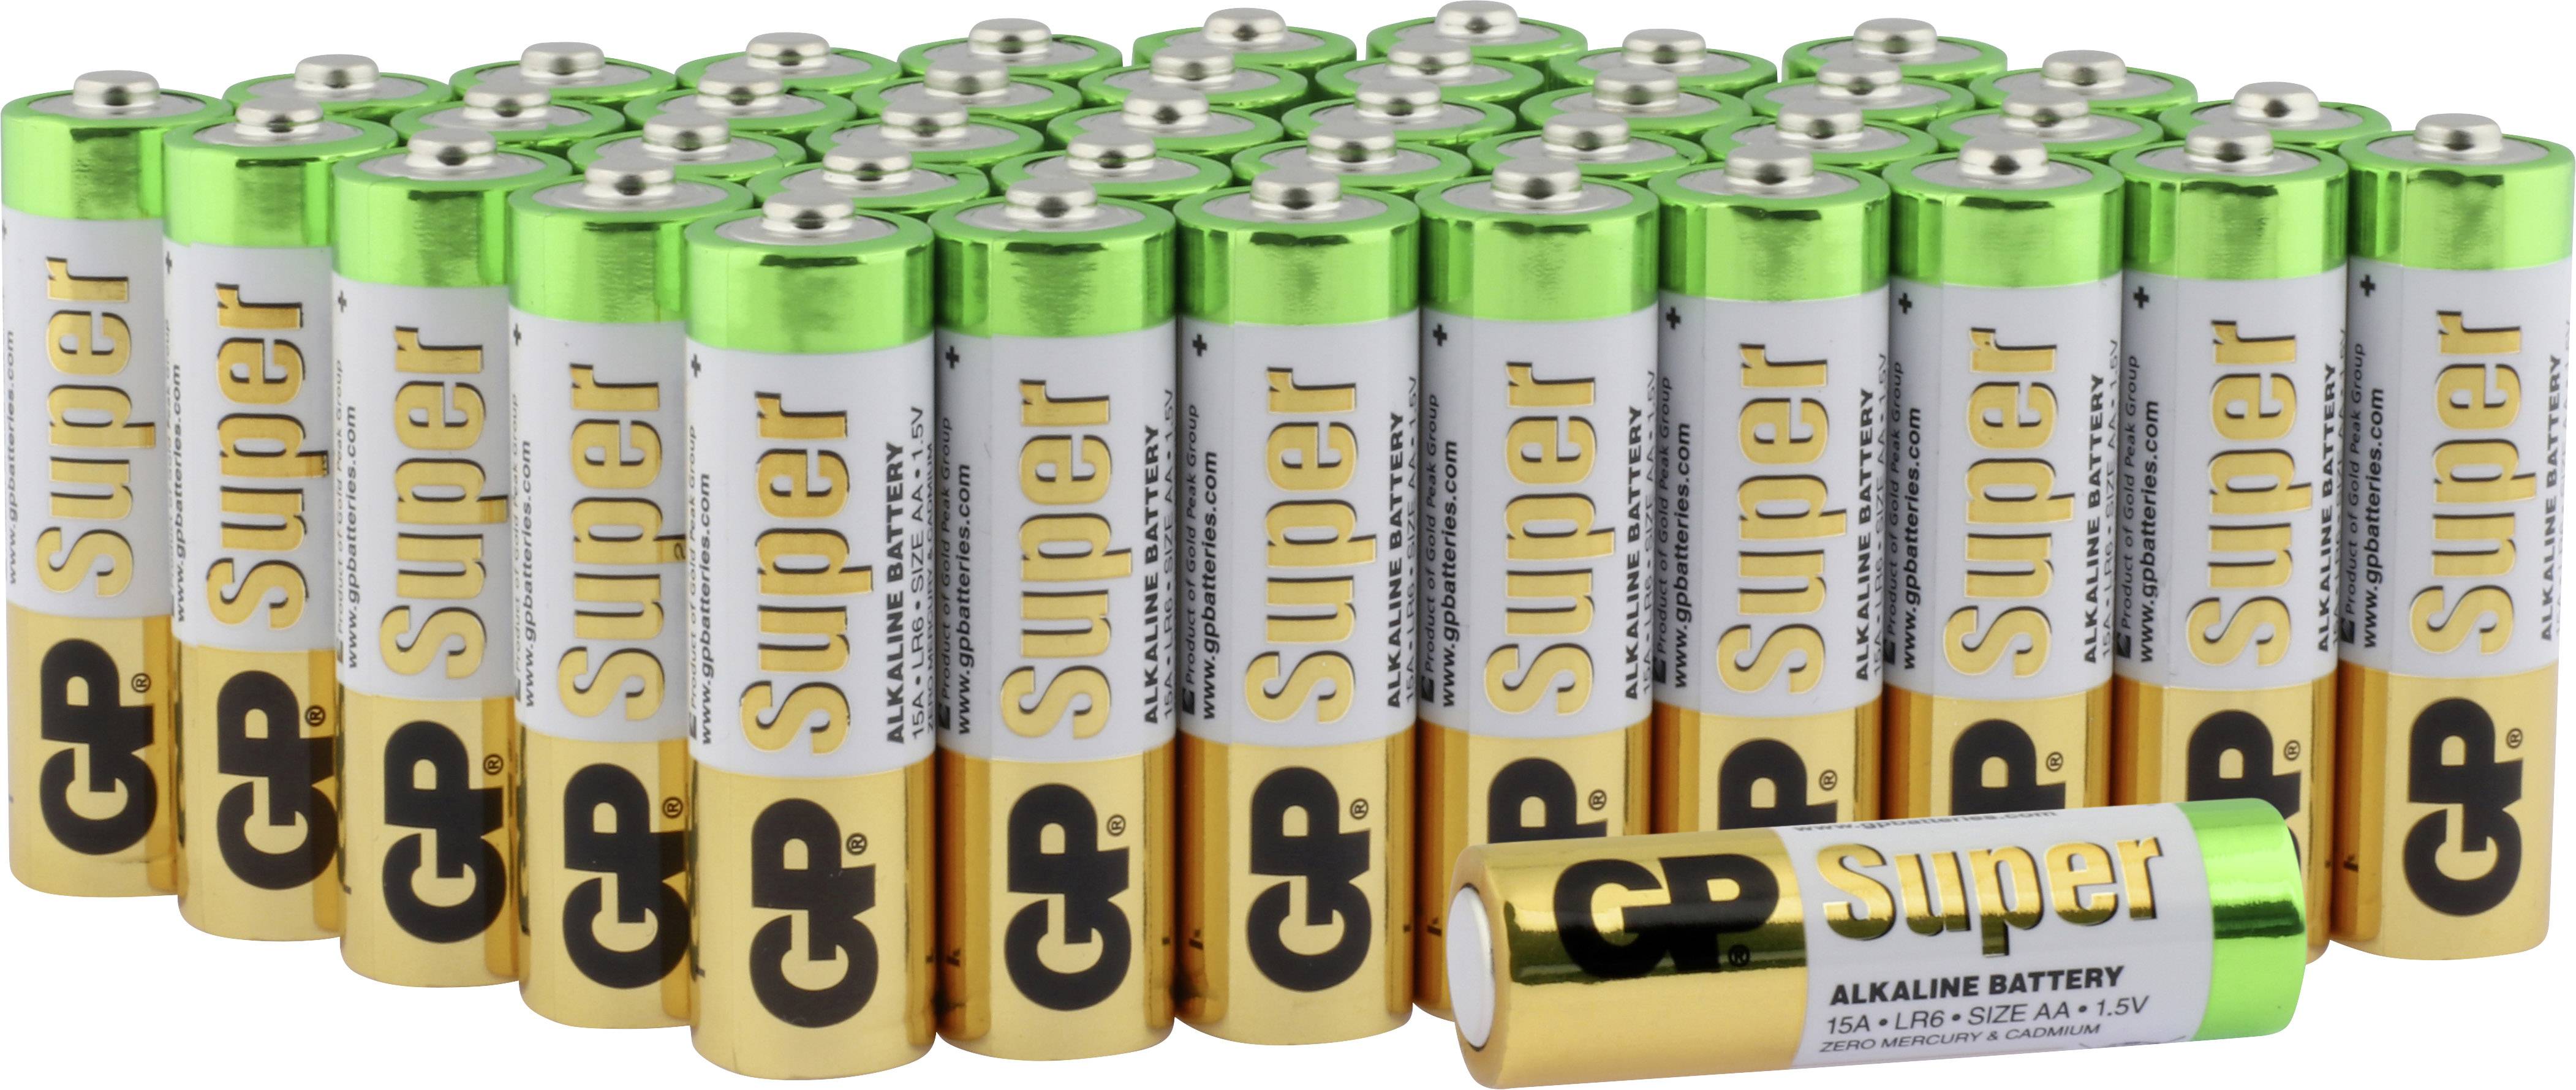 Батарейки gp batteries. Lr06 1.5v GP super. GP Alkaline 15a lr6. GP super Alkaline 15a lr6. Элемент питания Camelion Batterien AA lr6.